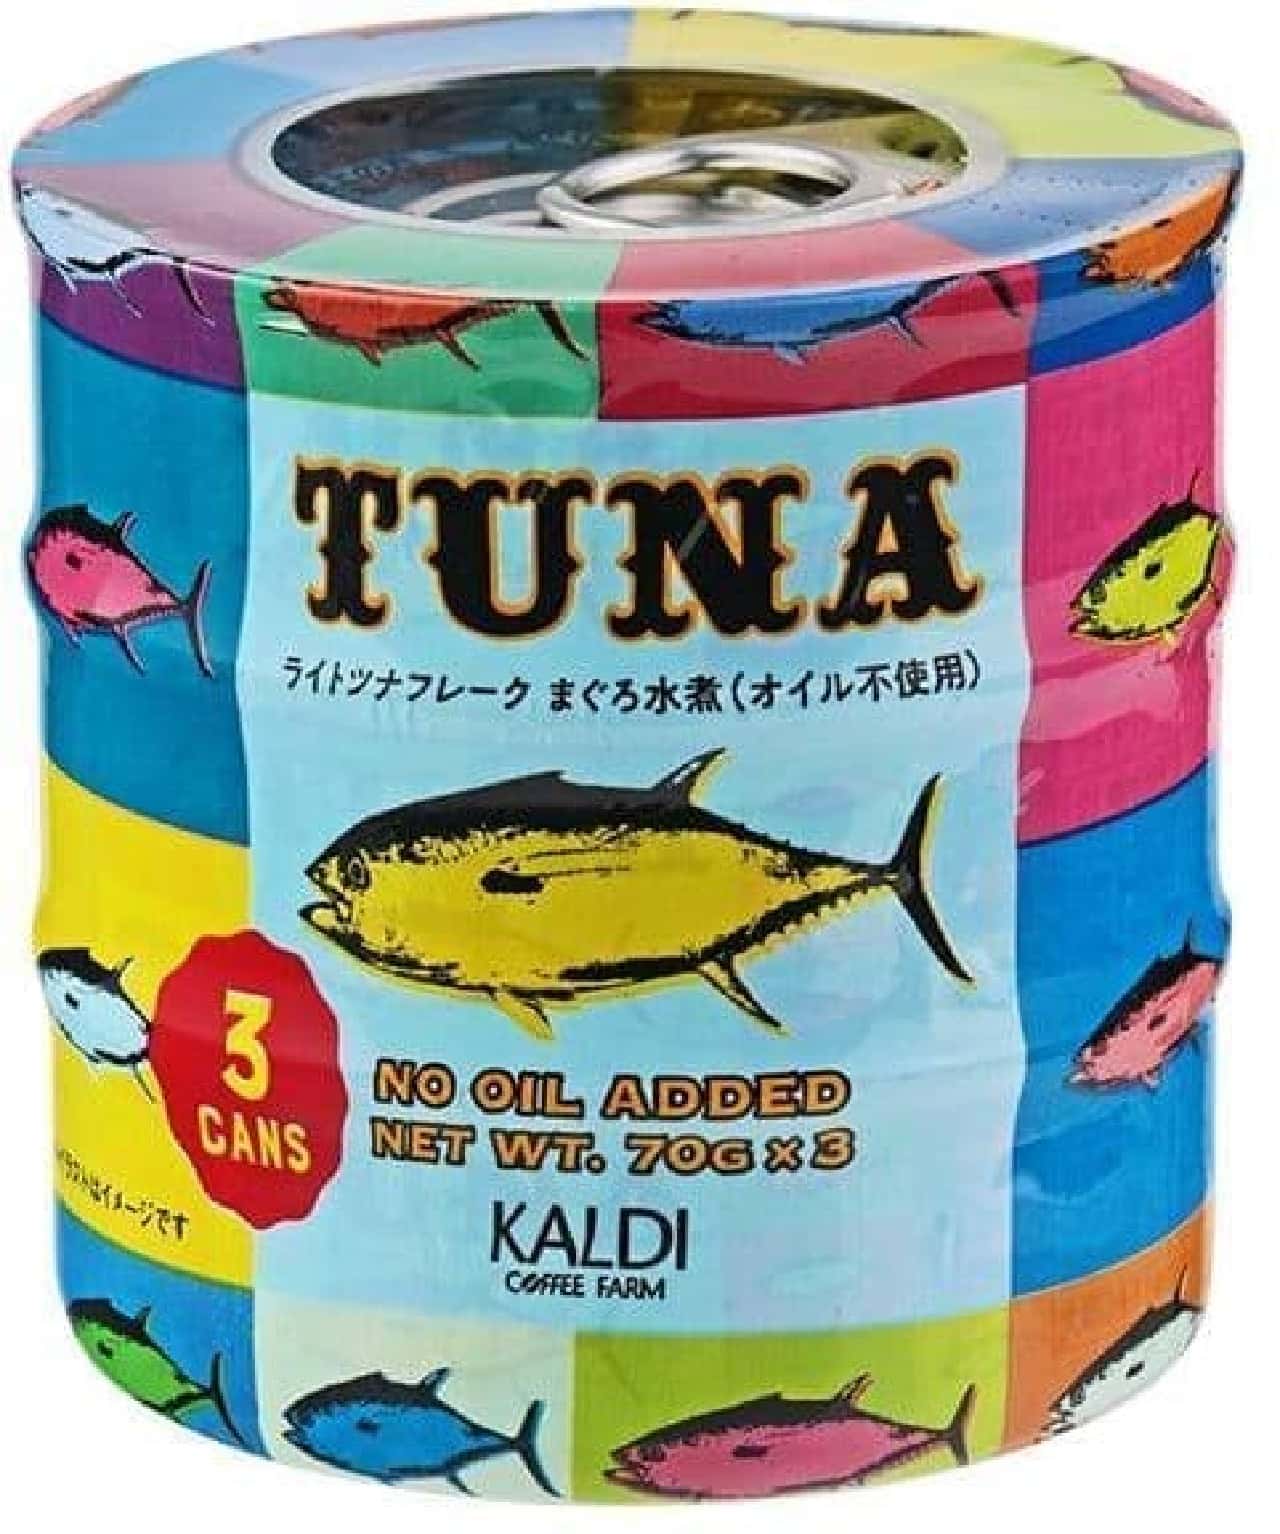 KALDI "Light Tuna Flakes Boiled Tuna (No Oil) 3 Cans Pack"